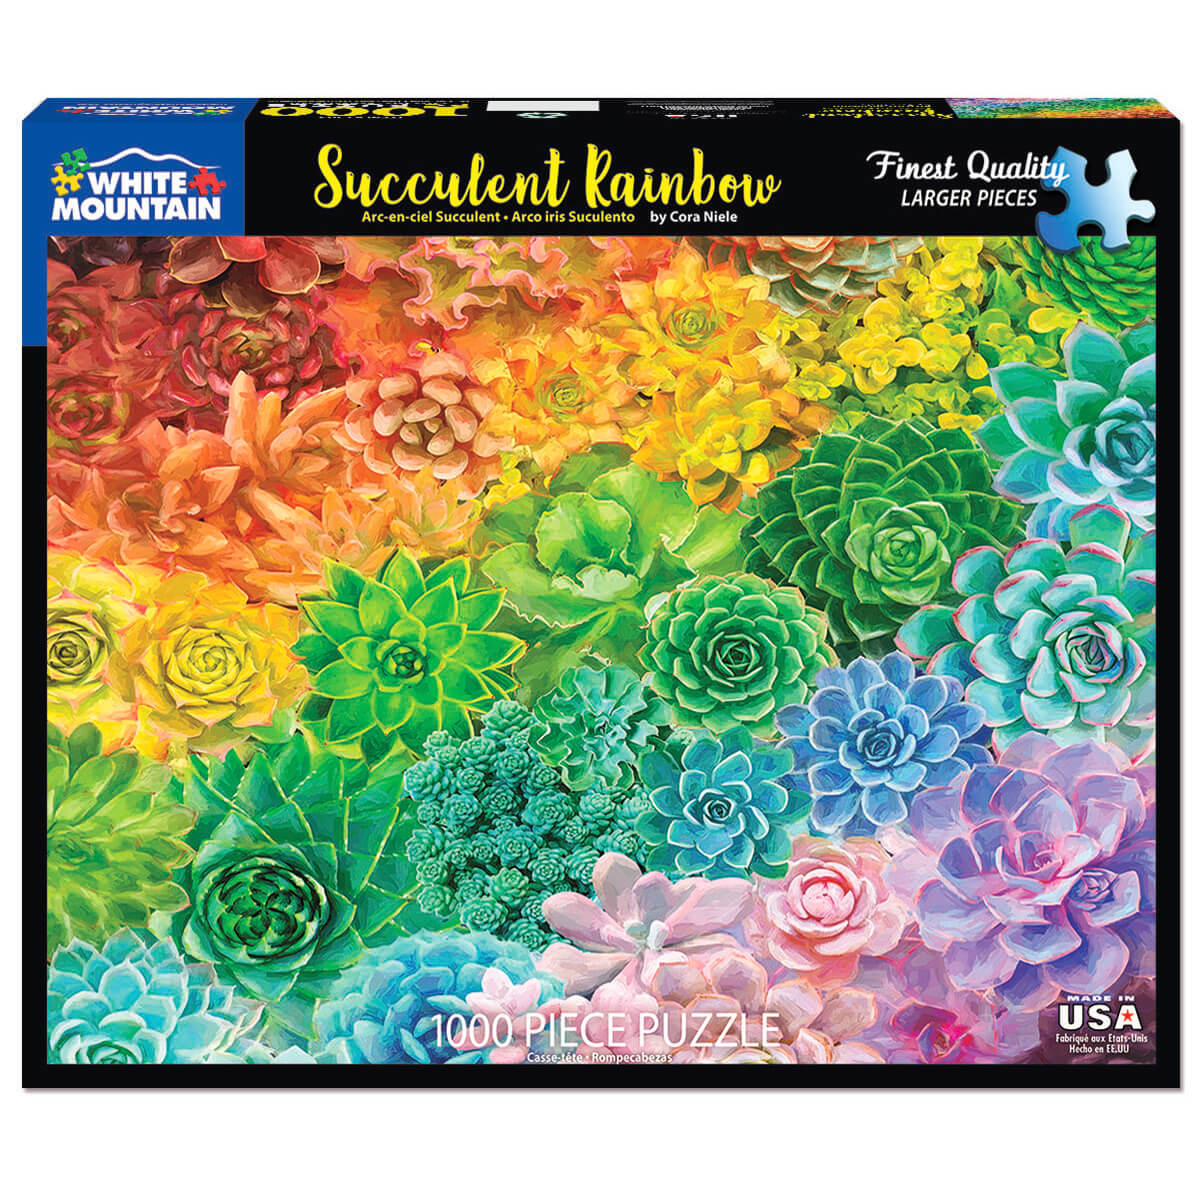 White Mountain Puzzles Succulent Rainbow 1000 Piece Jigsaw Puzzle